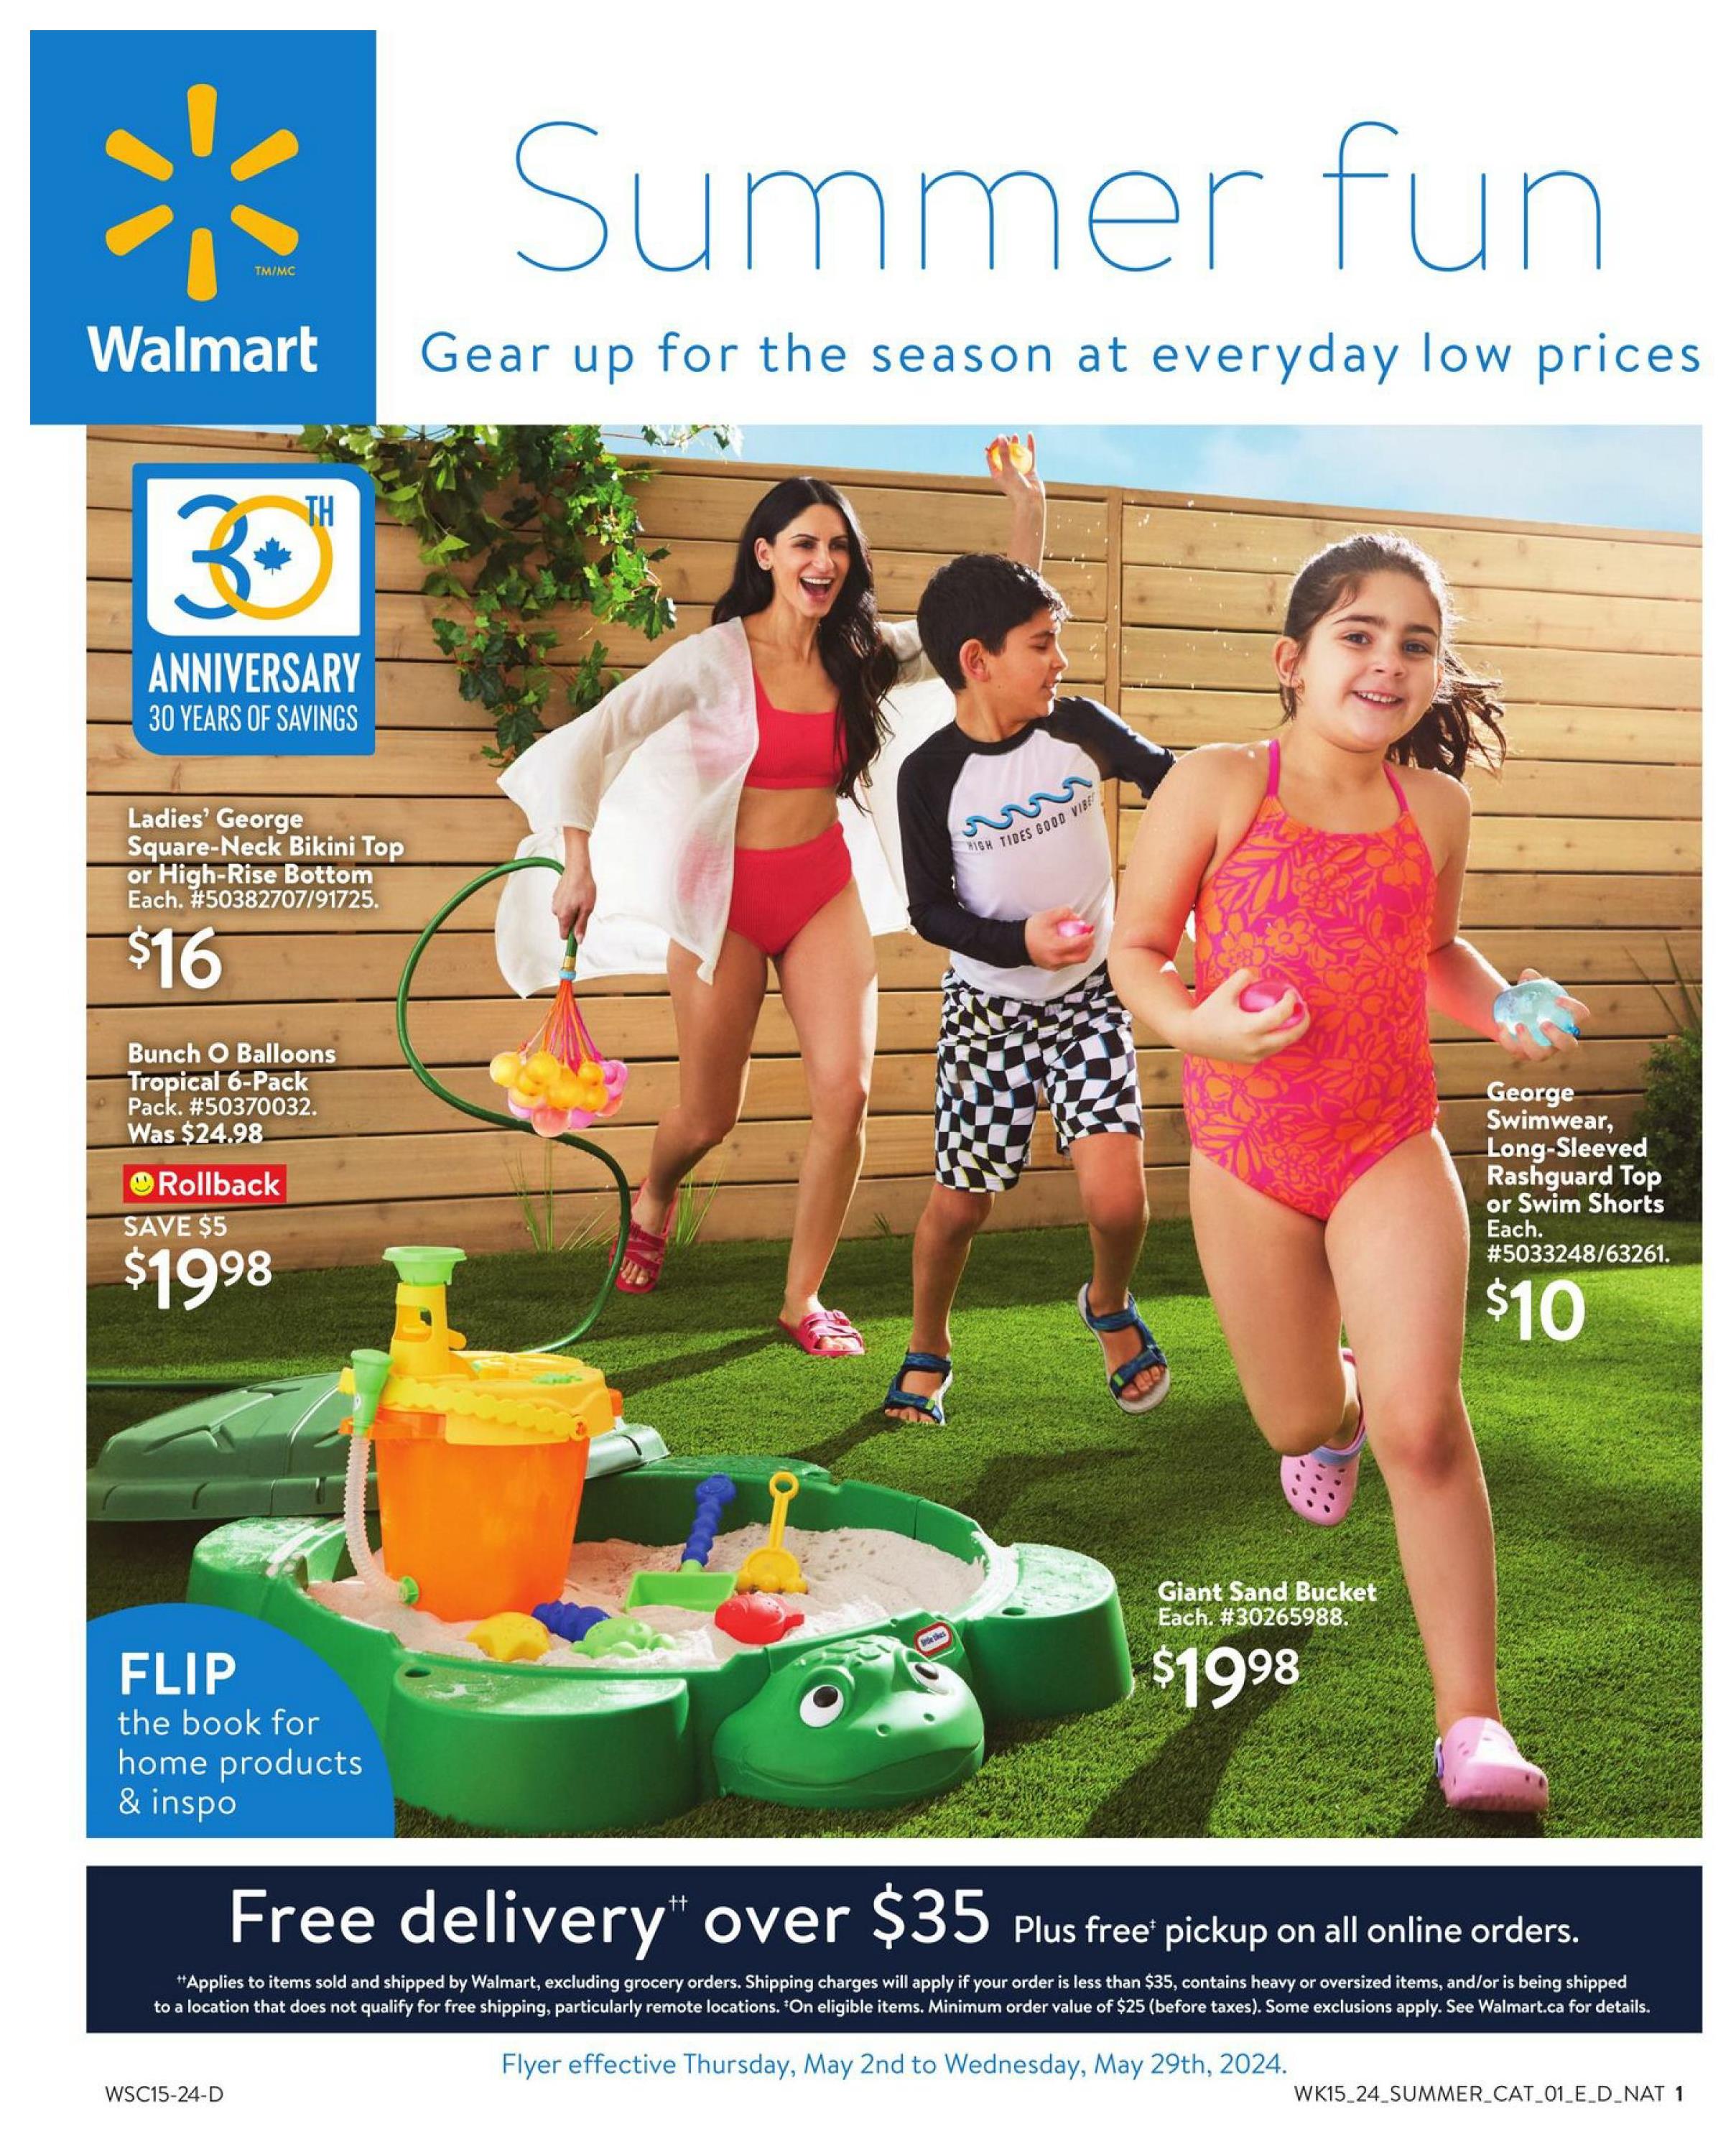 Walmart Canada - Summer Fun